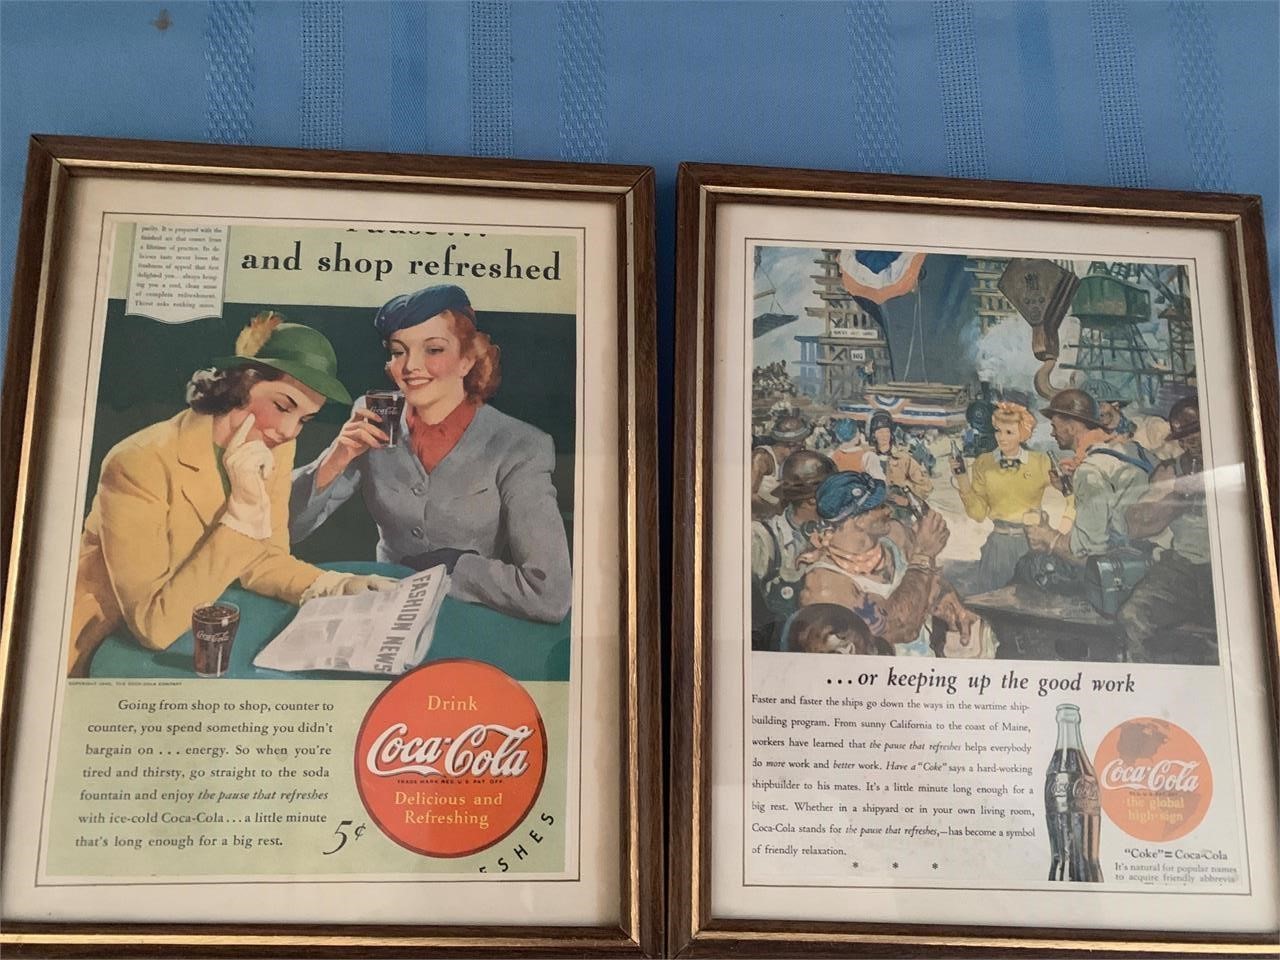 Vintage Framed Coca-Cola Advertisements